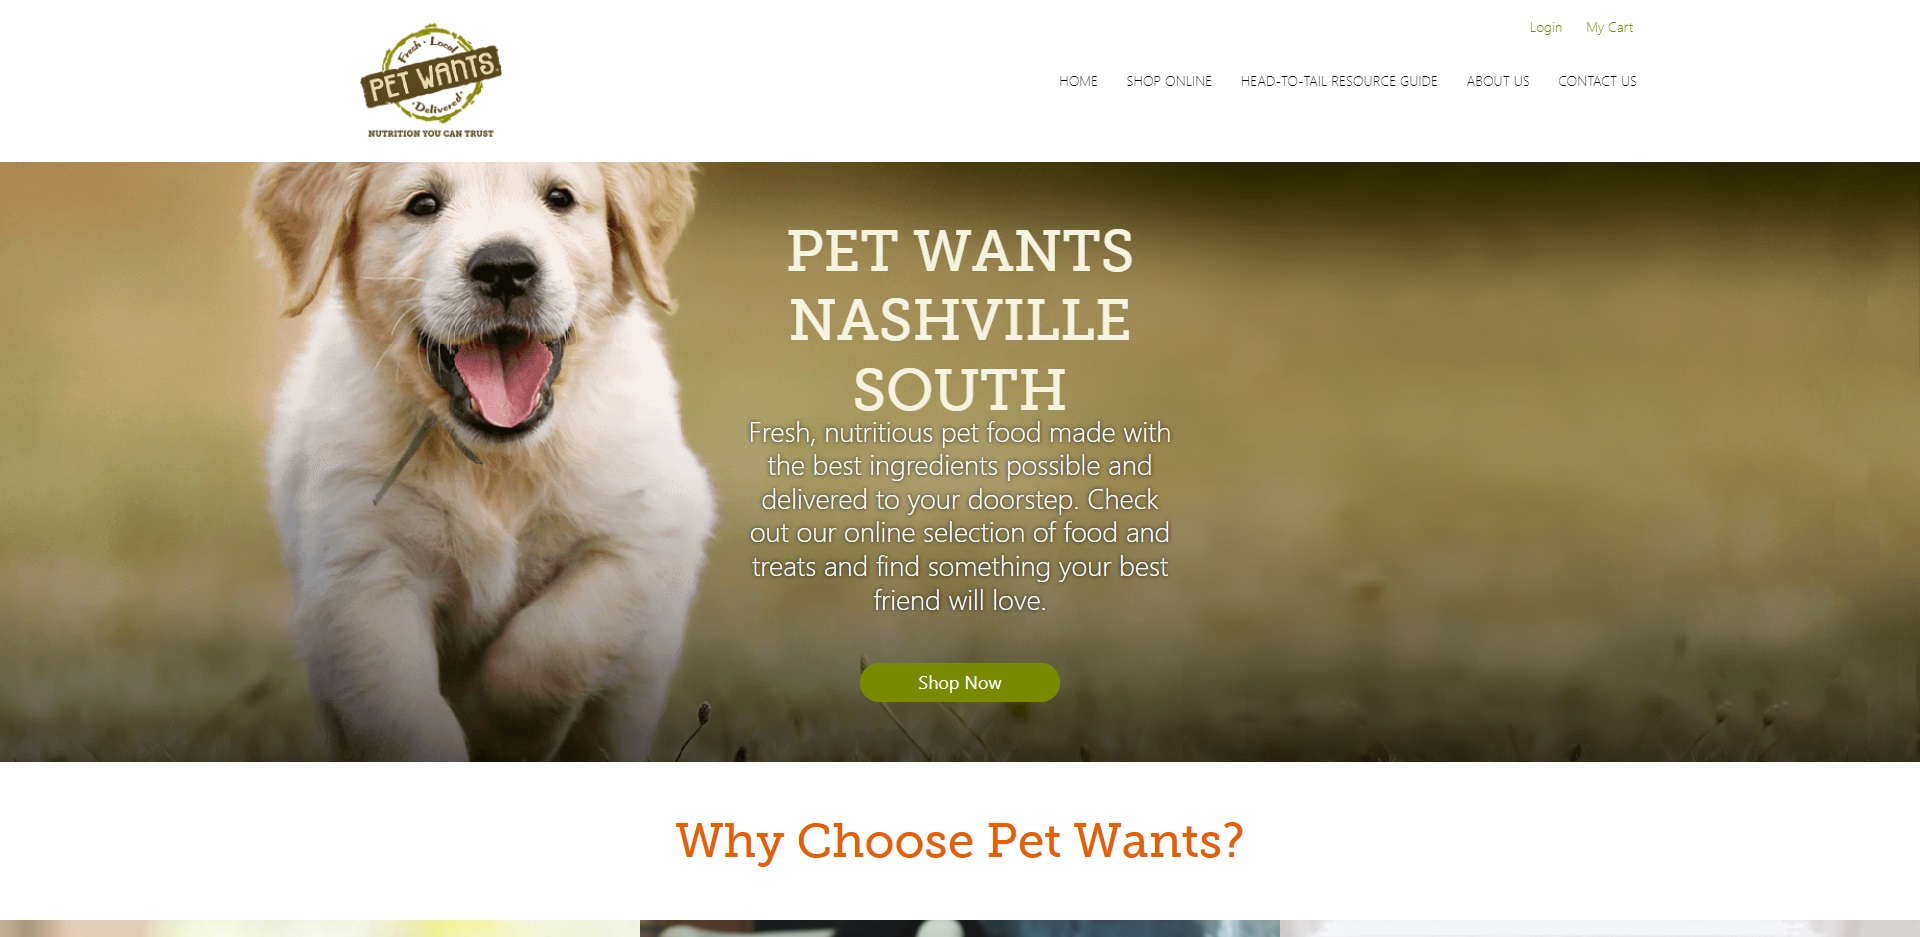 The best pet stores in Nashville, TN